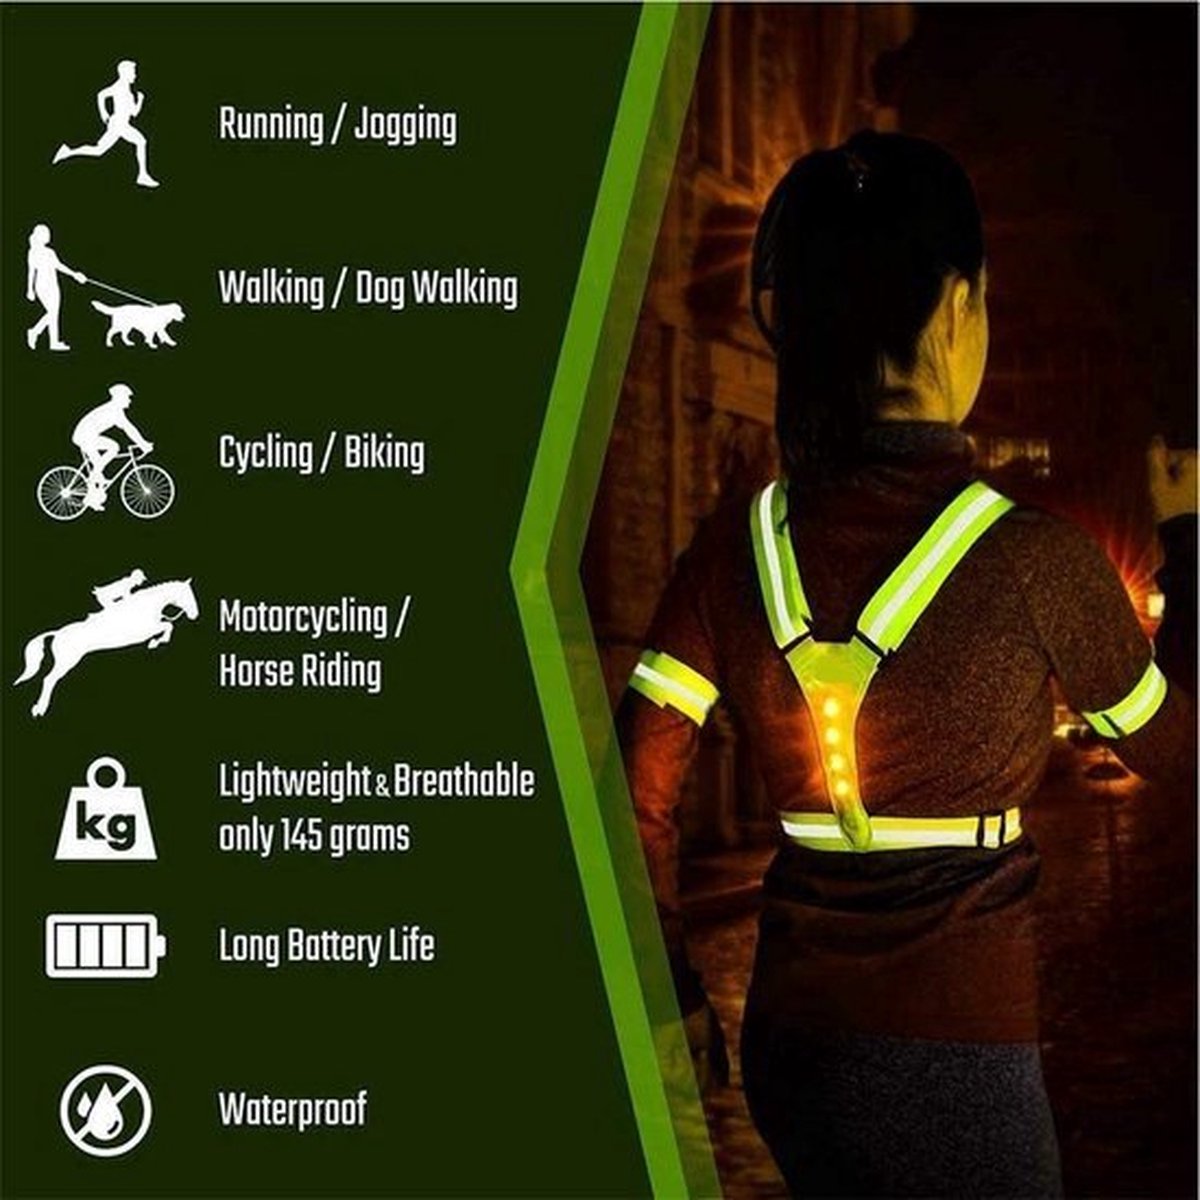 Hardloopvest met verlichting - Hardlopen -  Reflecterend - Veiligheidsvest - Hardloopaccessoires - Hardloopverlichting - Sport vest - Running vest - One size fits all - Merkloos